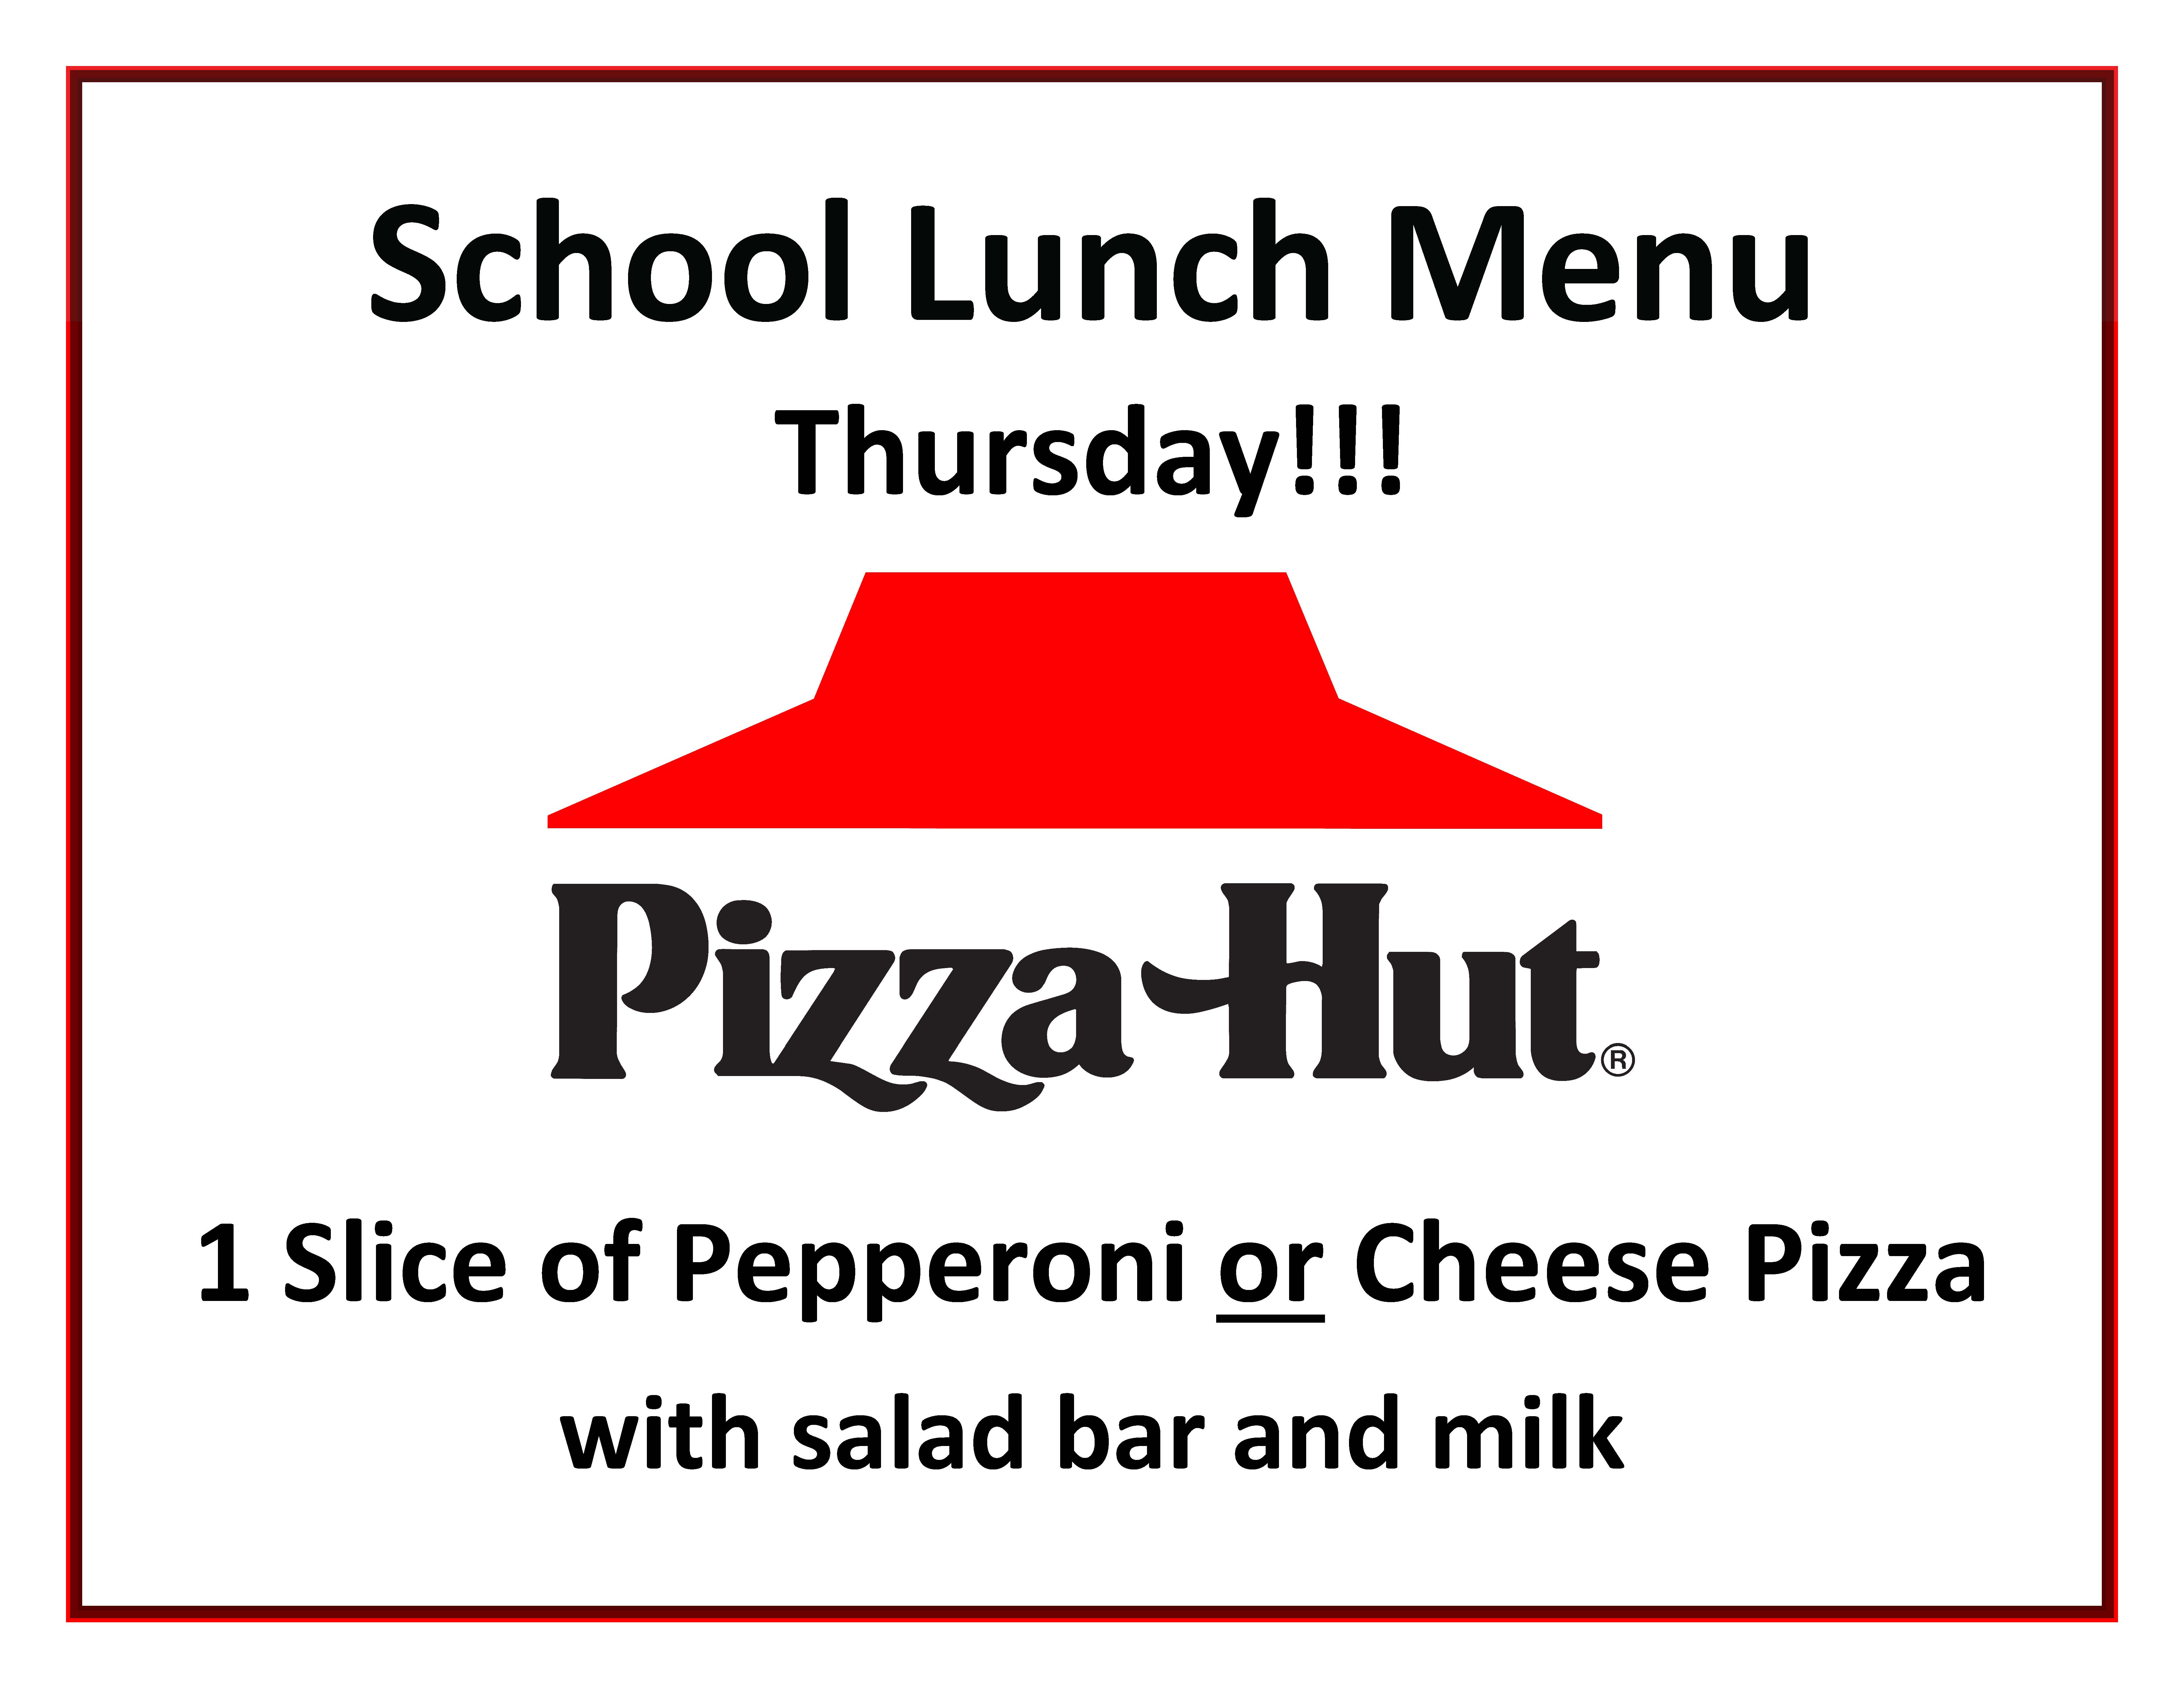 Pizza Hut Day in the school cafeteria - April 25